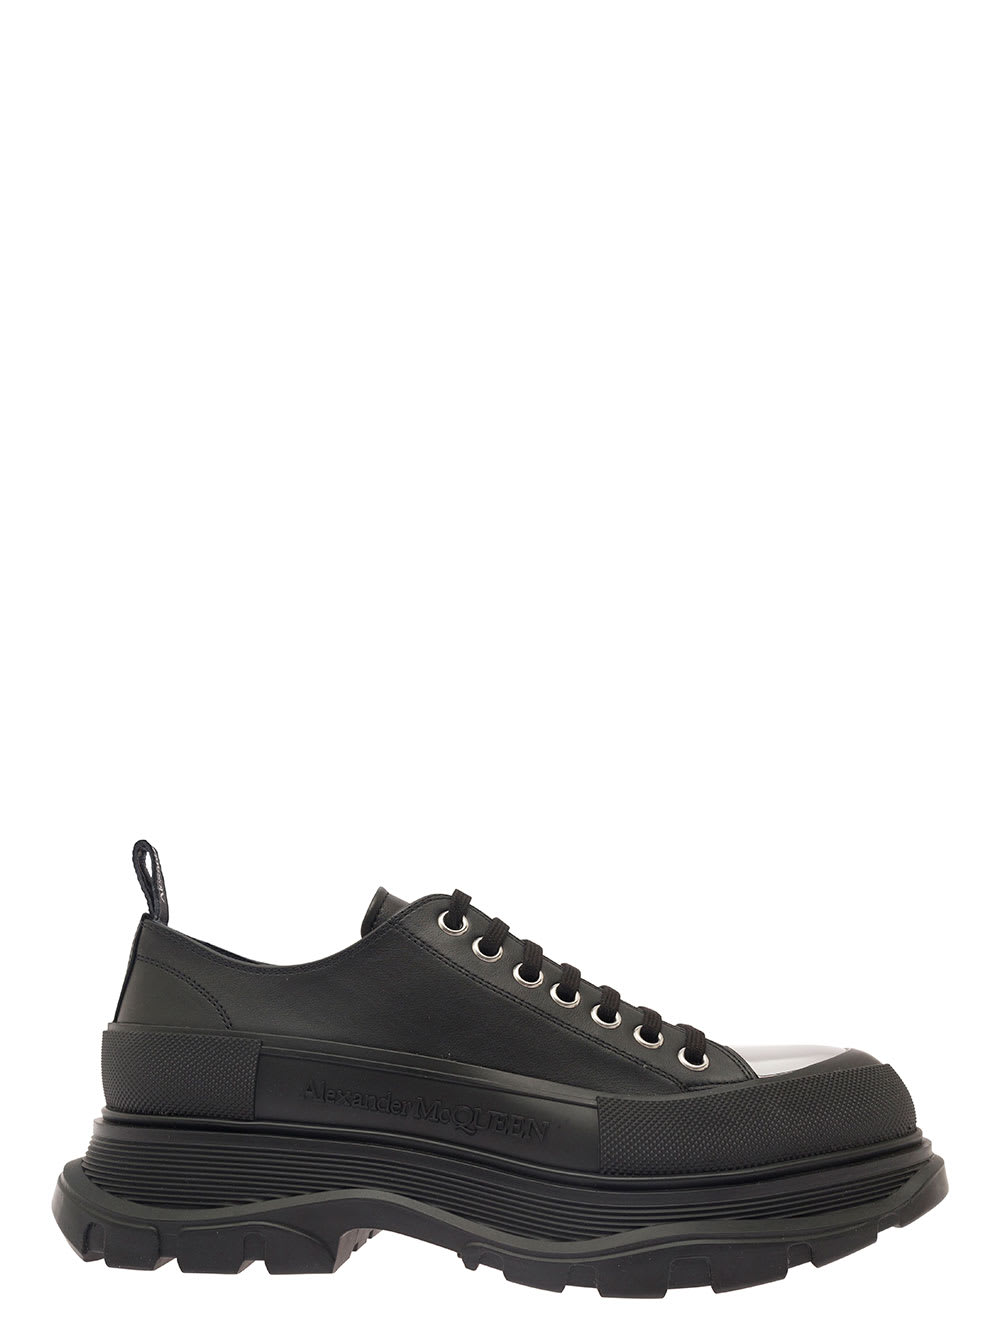 Shop Alexander Mcqueen Trade Slick Black Sneakers With Oversized Platform And Metallic Toe In Leather Man